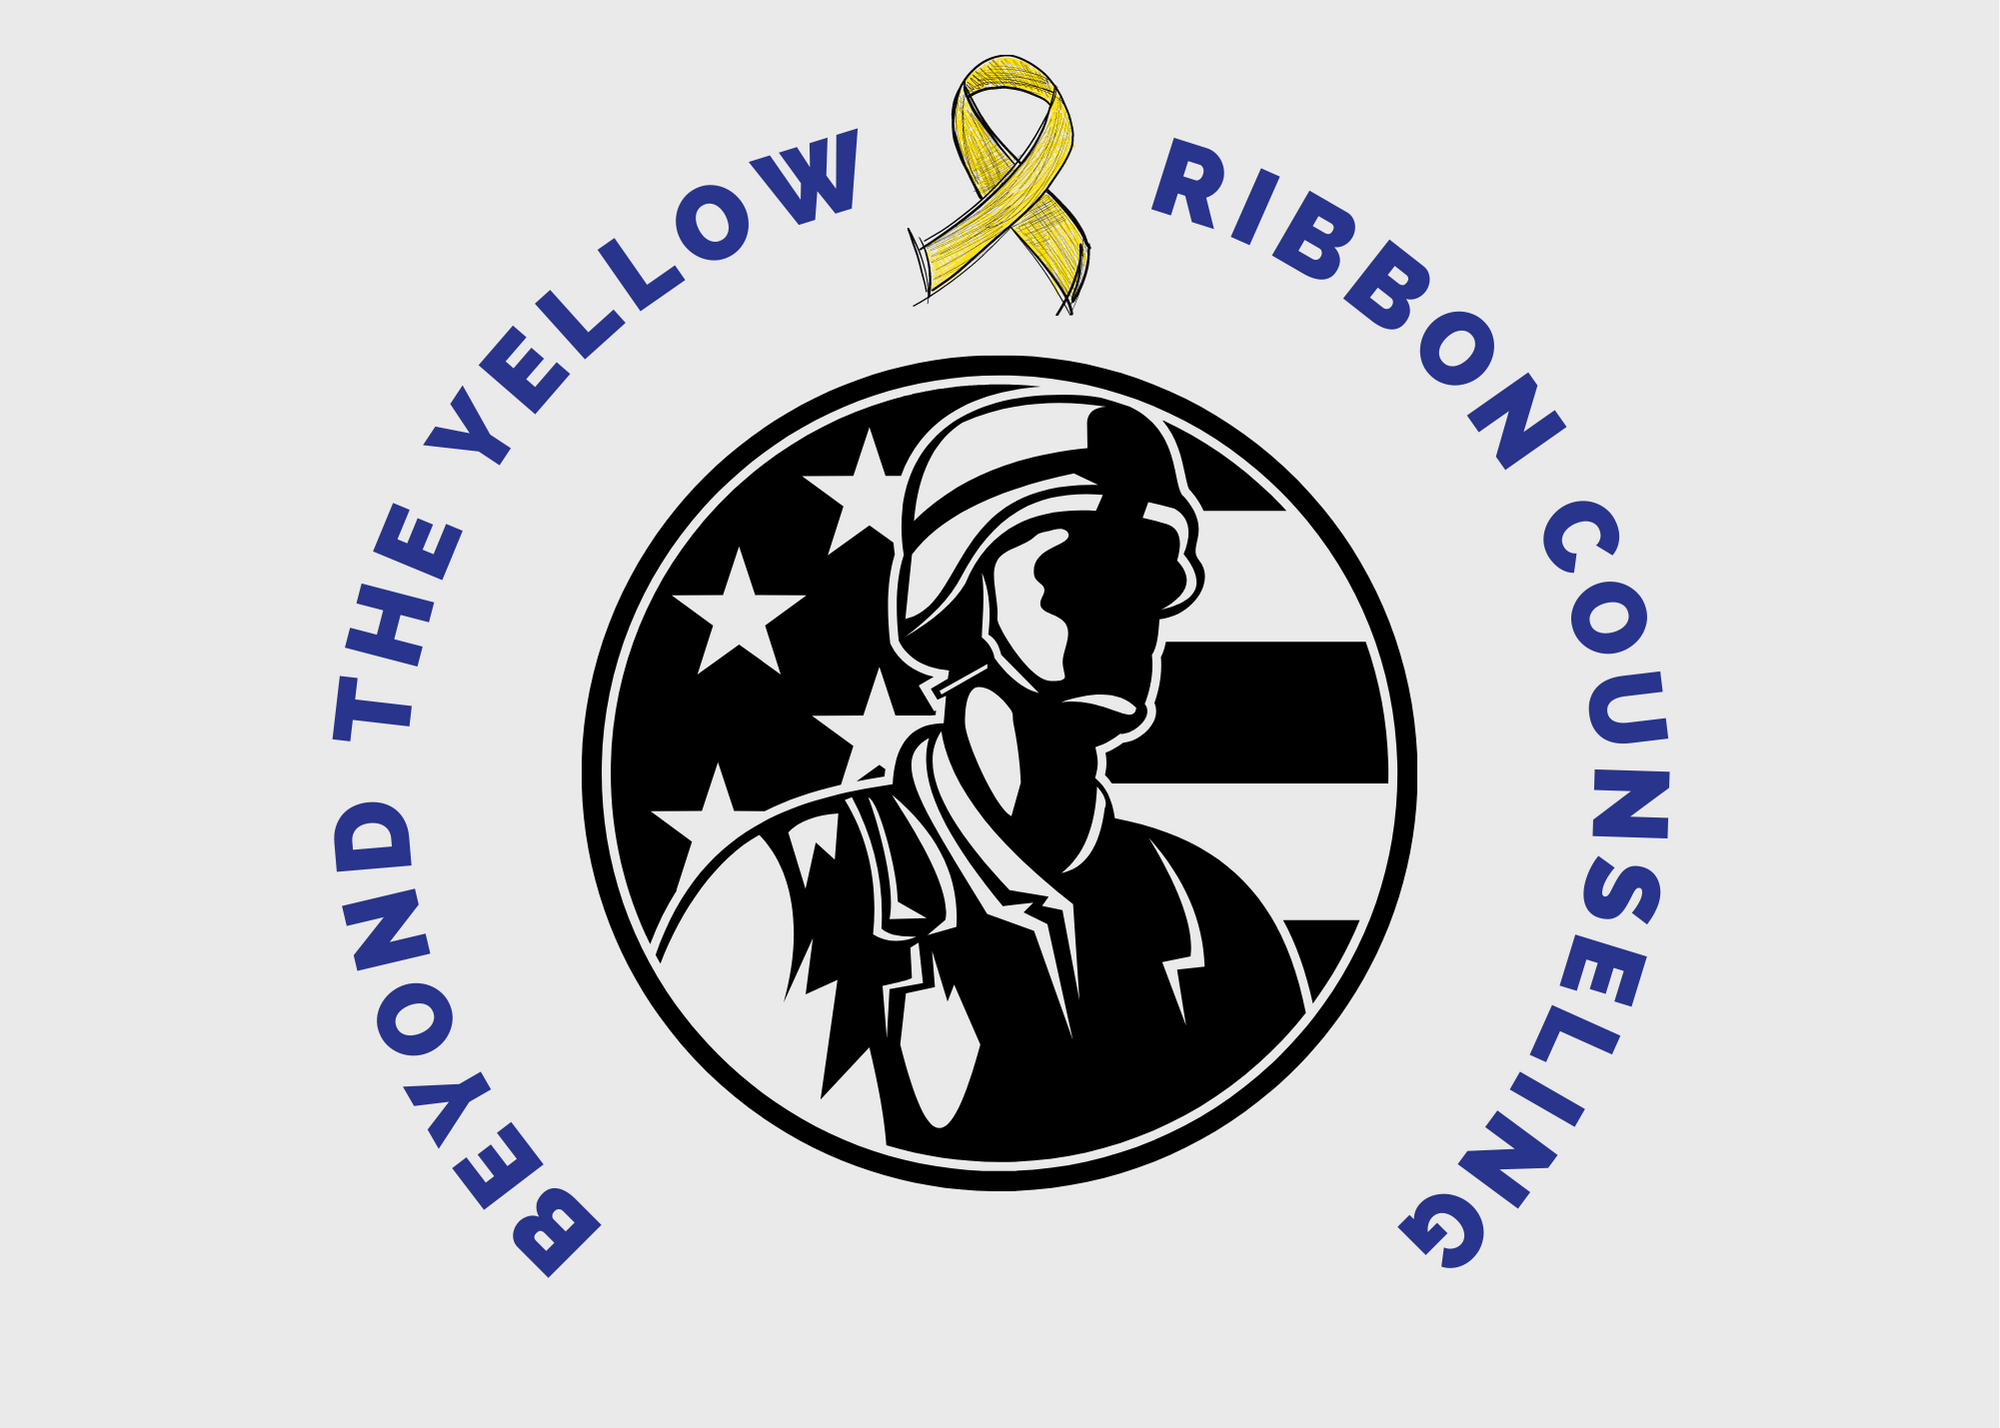 Beyond the Yellow Ribbon Counseling